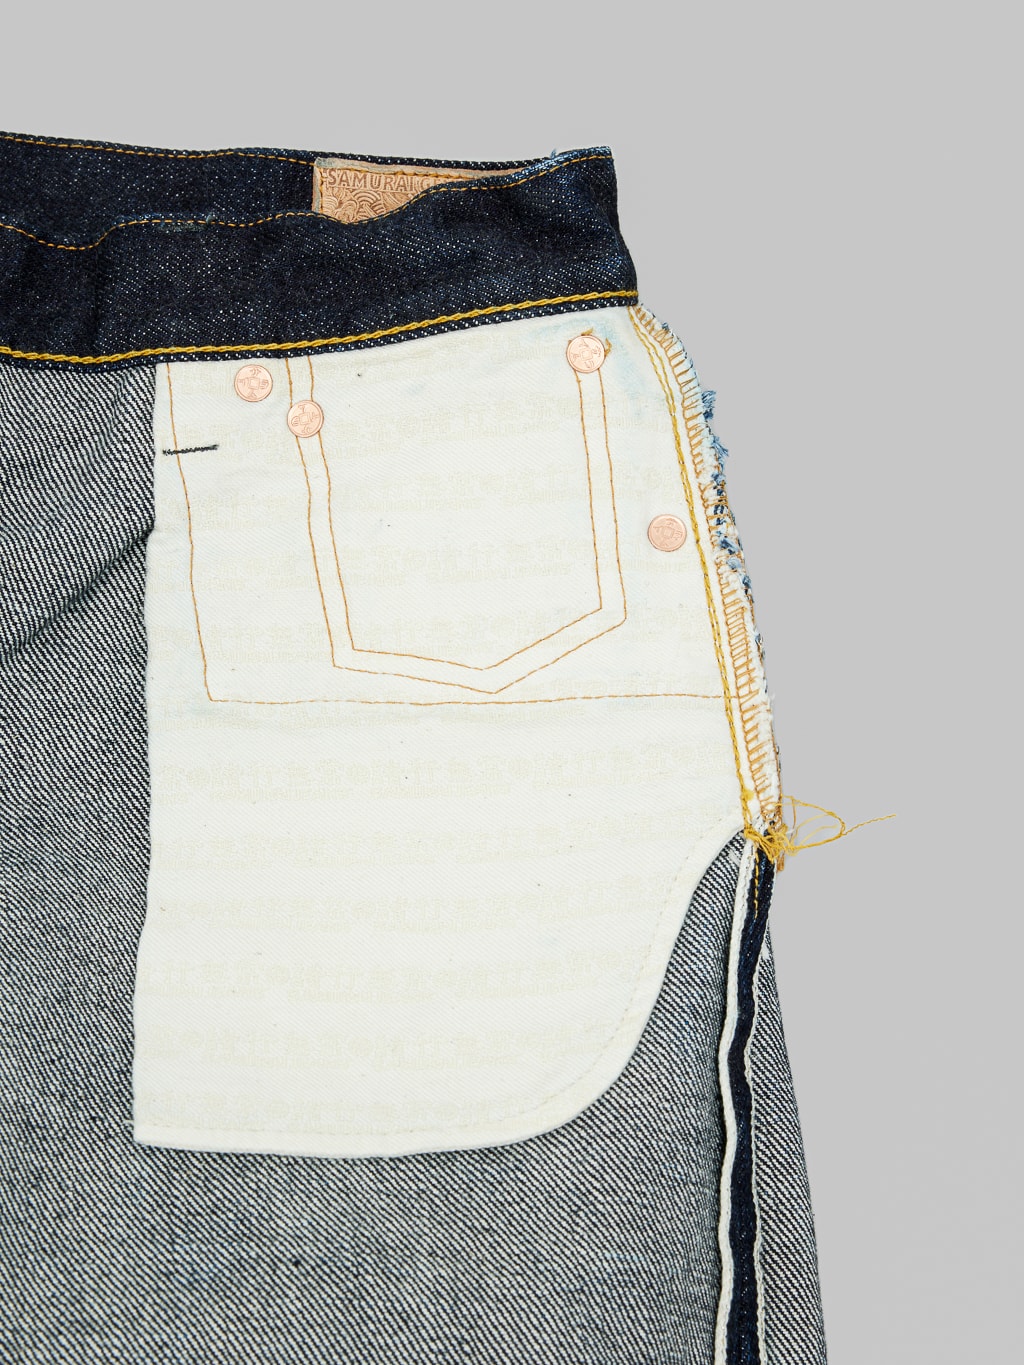 Samurai Jeans S511XX 25oz Kirinji Slim Tapered selvedge Jeans pocket bags